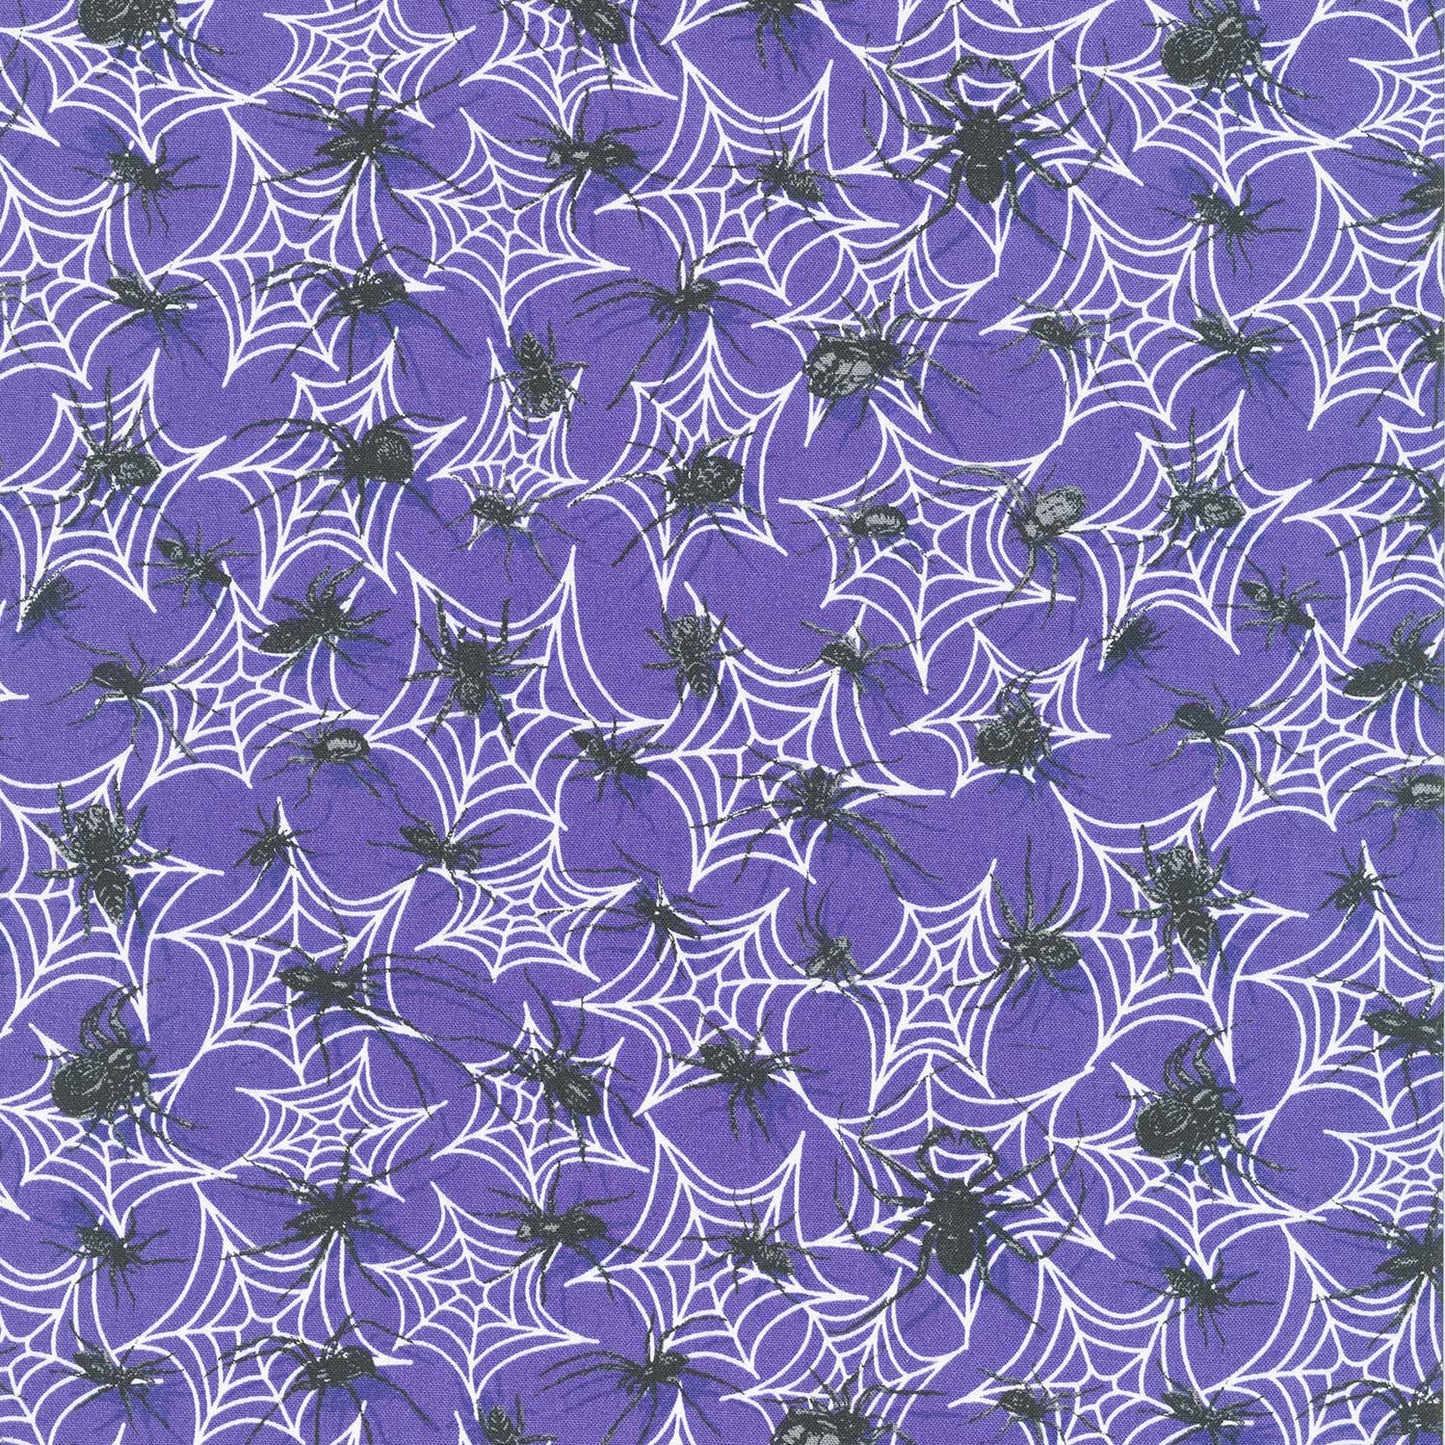 Boo Whoo - Spiders on Webs Purple Black Glow Yardage Primary Image